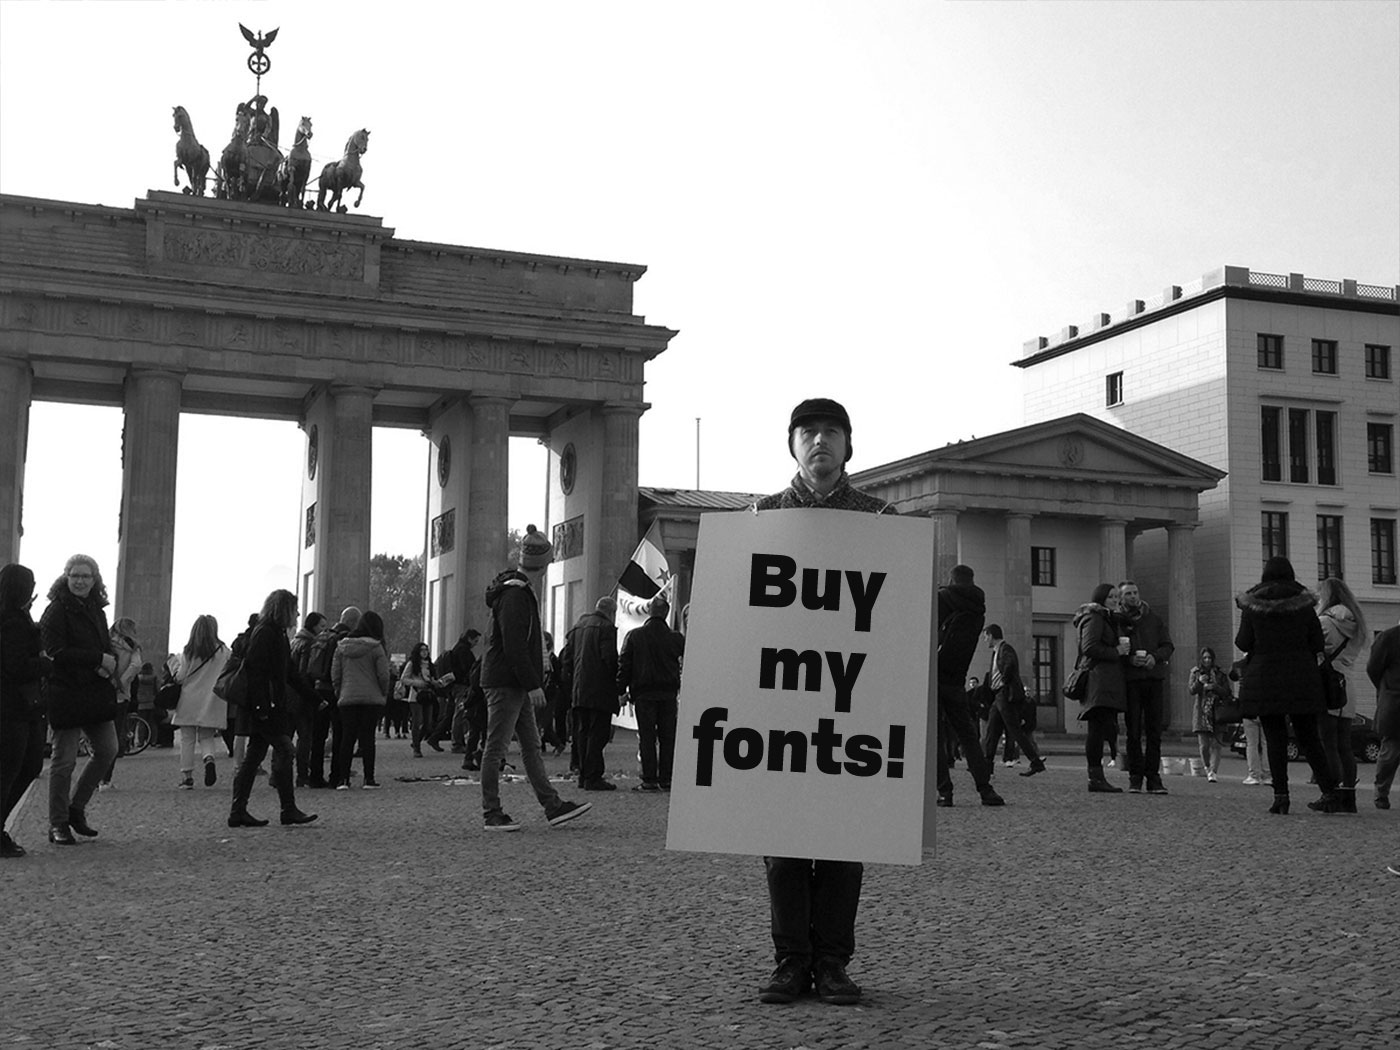 fonts font type family sans sans-serif modern Typeface german geometric constructed